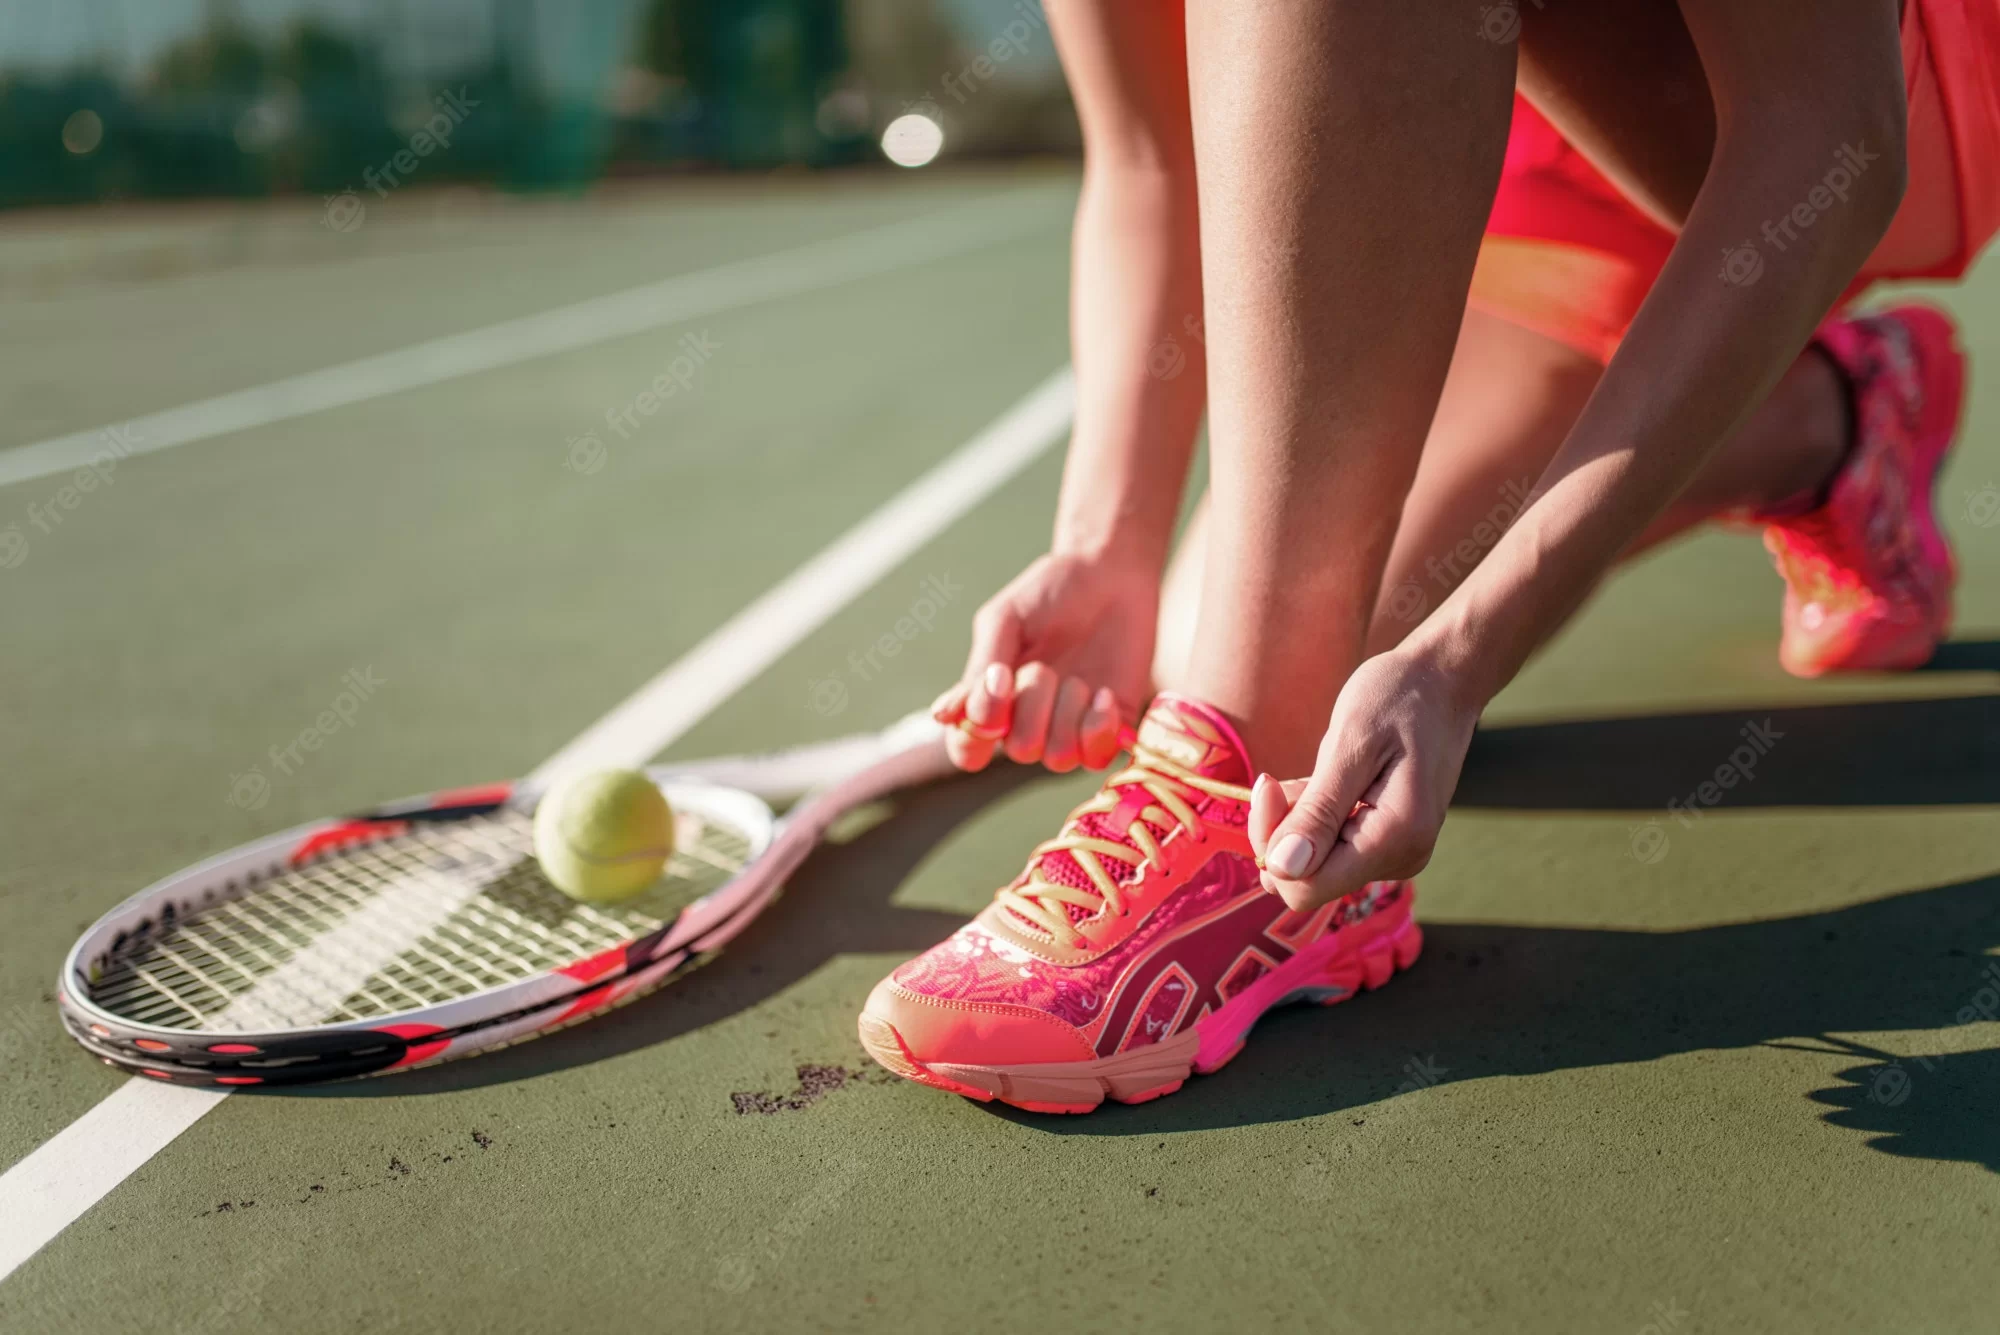 How to Lace Tennis Shoes - Pelotista - Best tennis academies